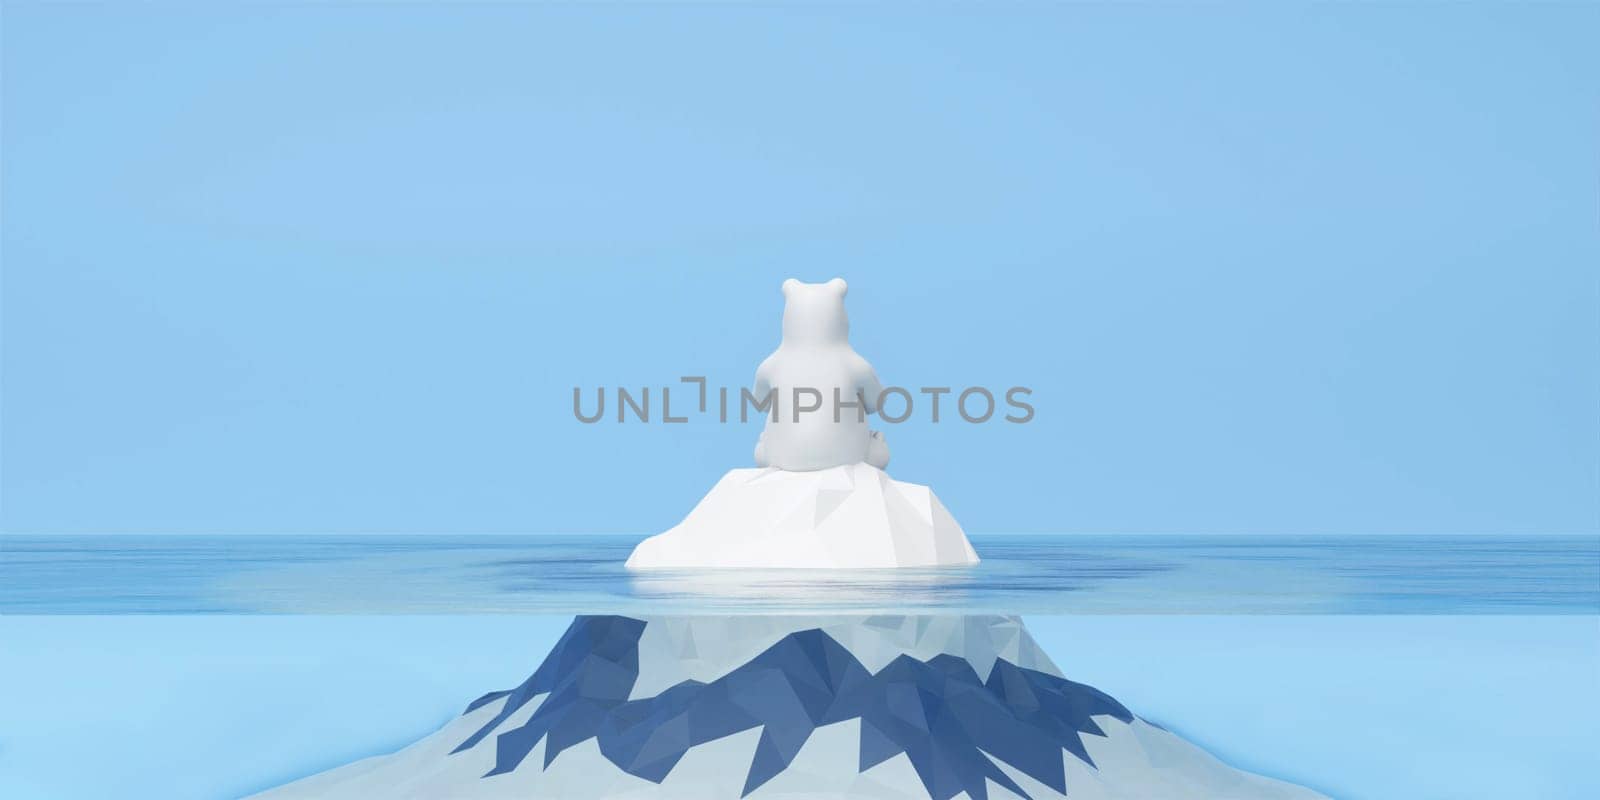 3d polar bear on ice. Melting iceberg and global warming. Climate change. 3d rendering illustration..